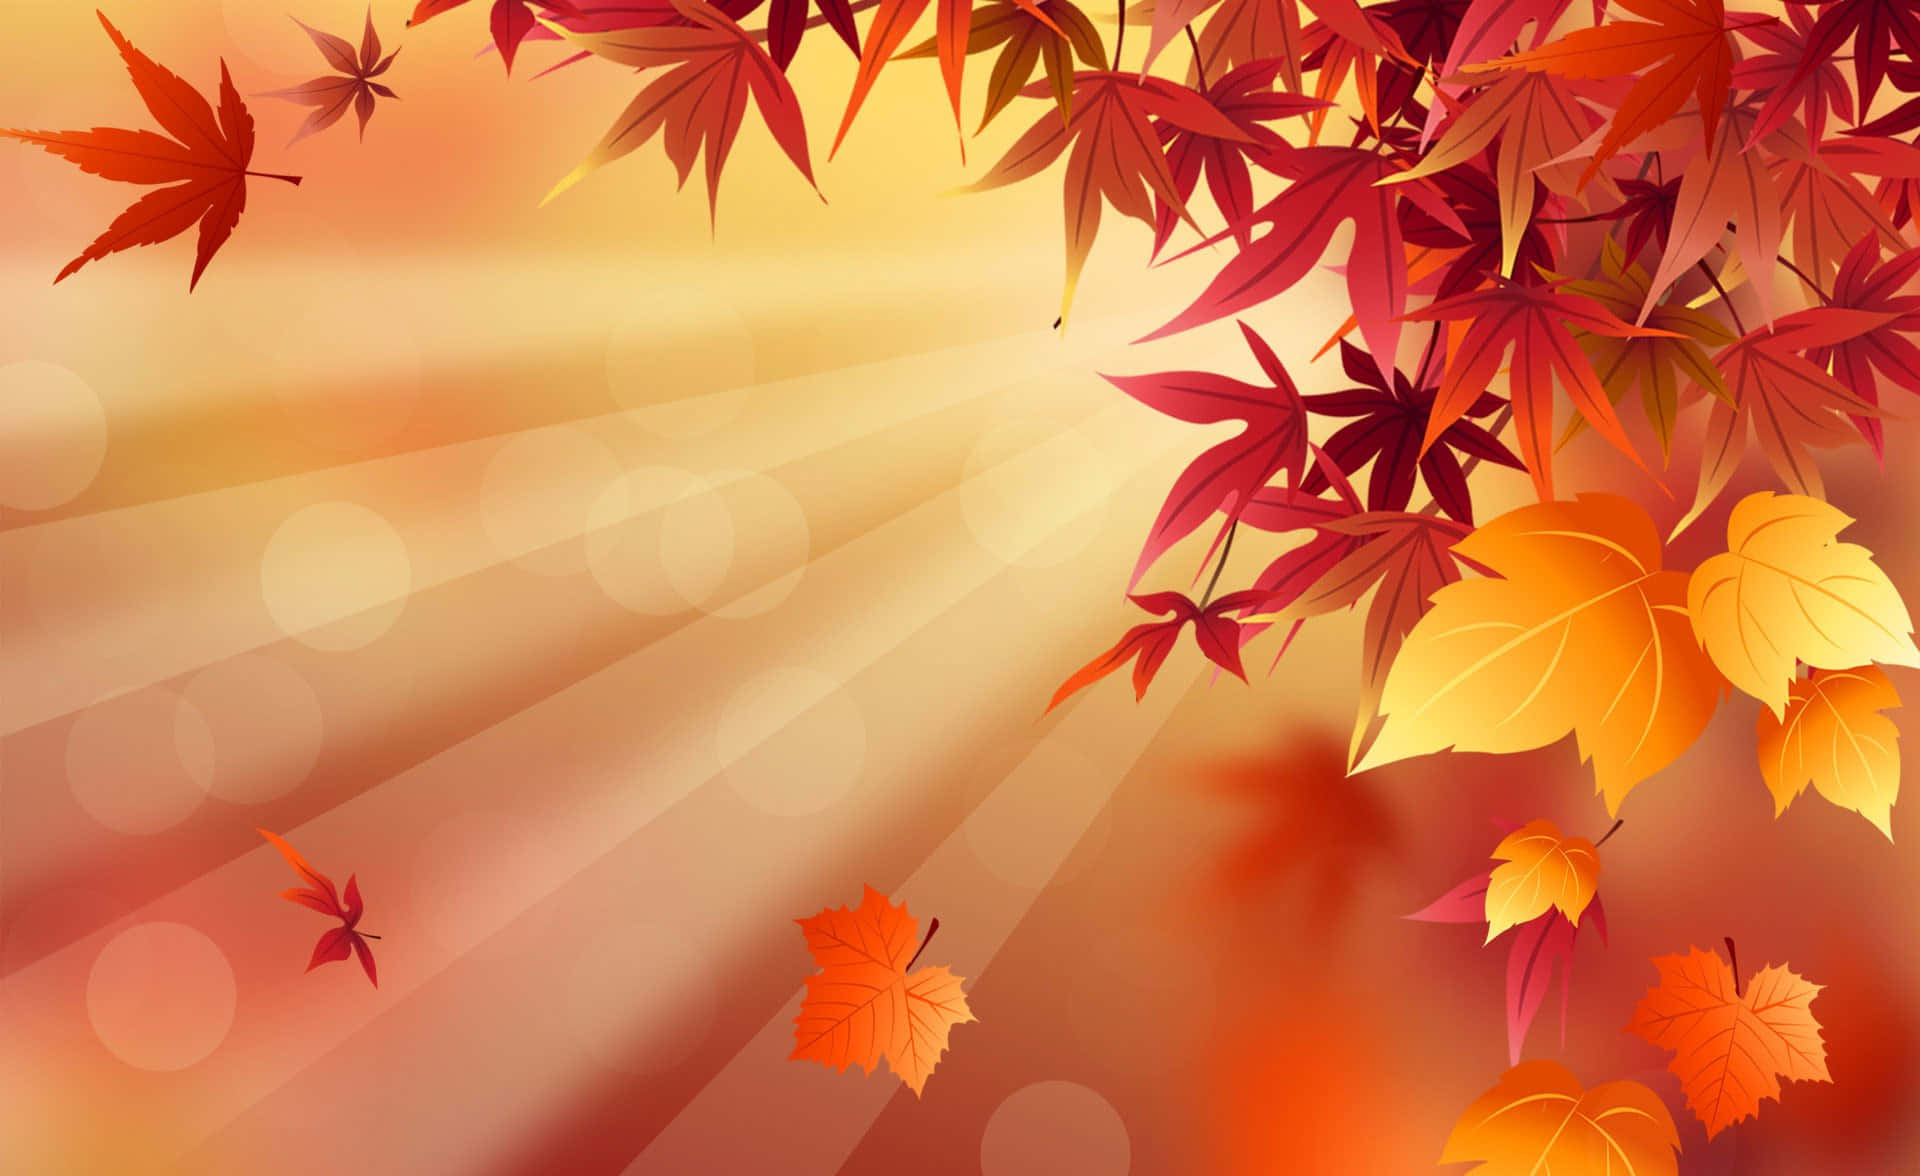 Autumn Season Falling Leaves Digital Art Background